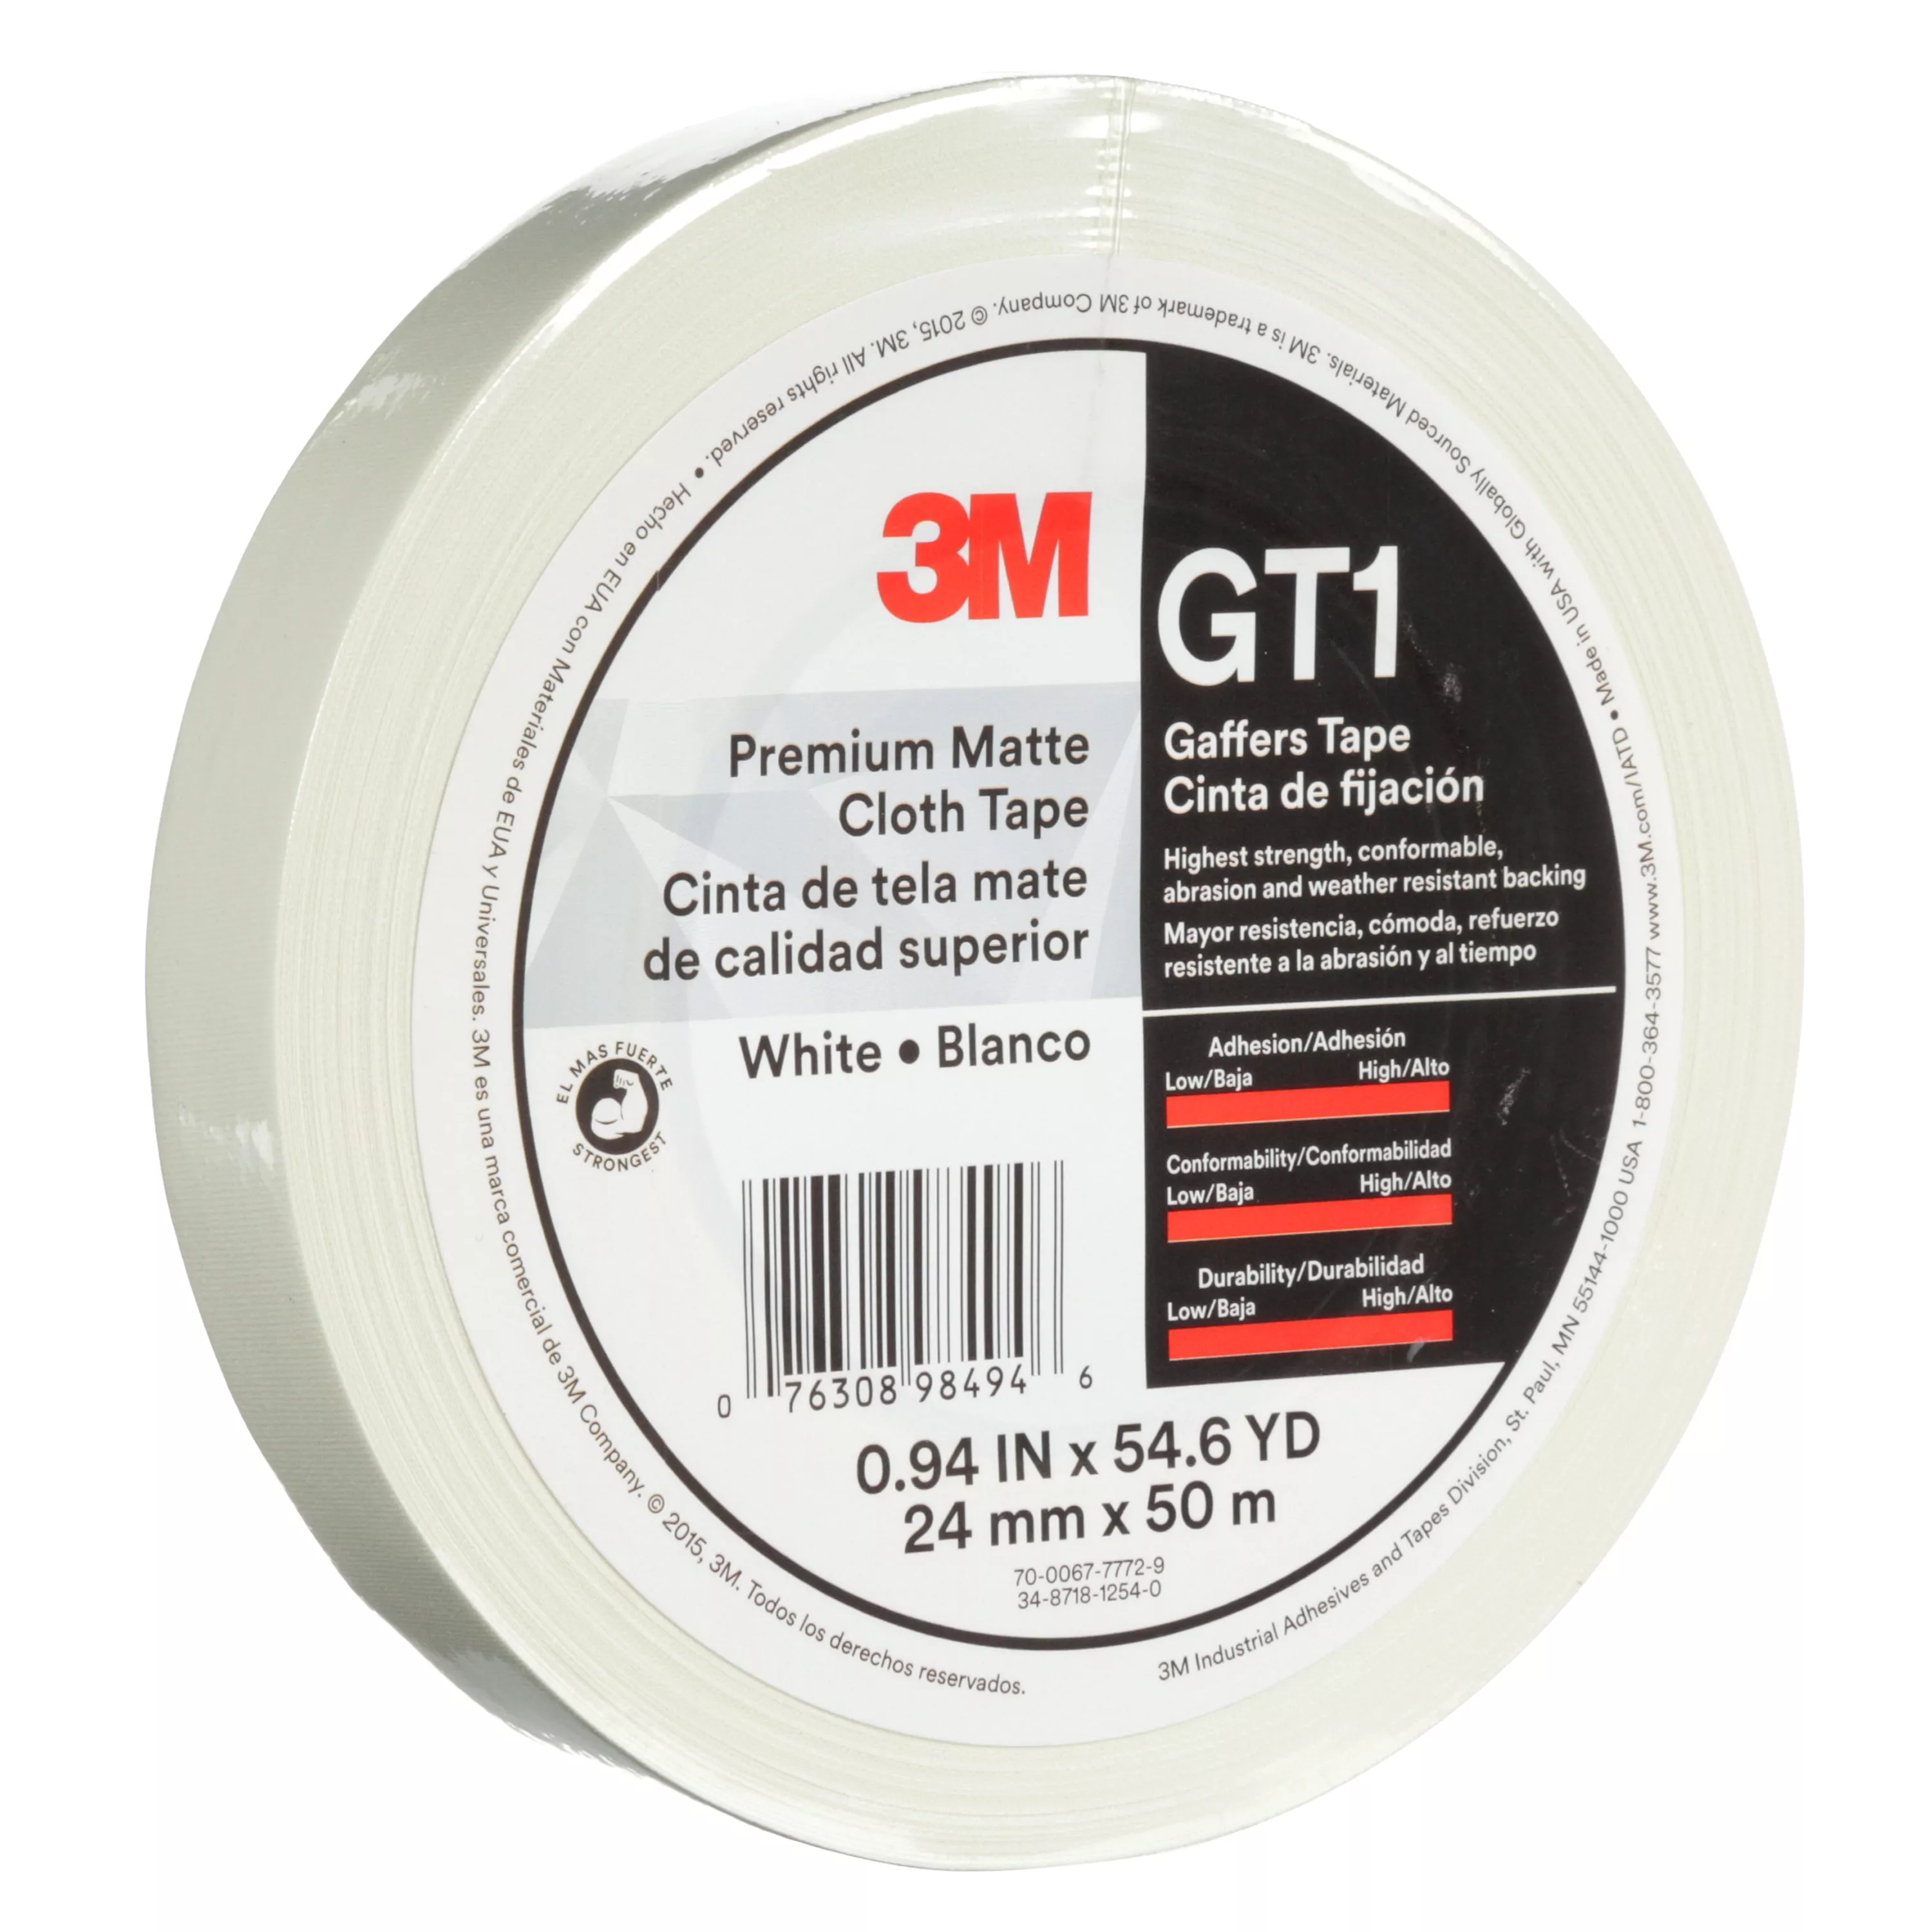 3M™ Premium Matte Cloth (Gaffers) Tape GT1, White, 24 mm x 50 m, 11 mil,
48/Case